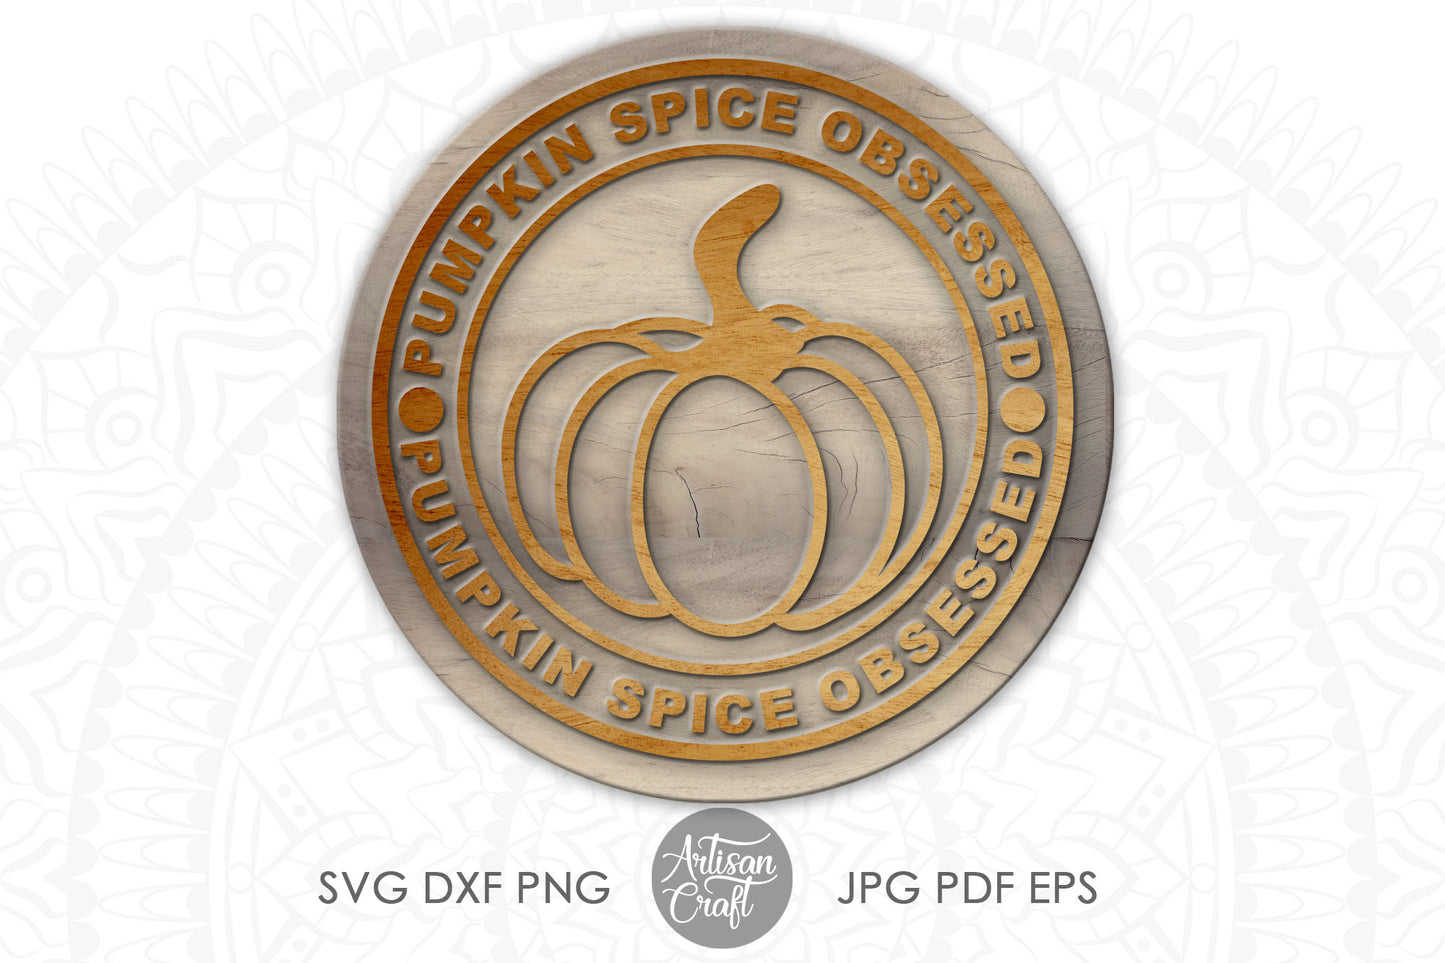 Pumpkin Spice Obsessed SVG